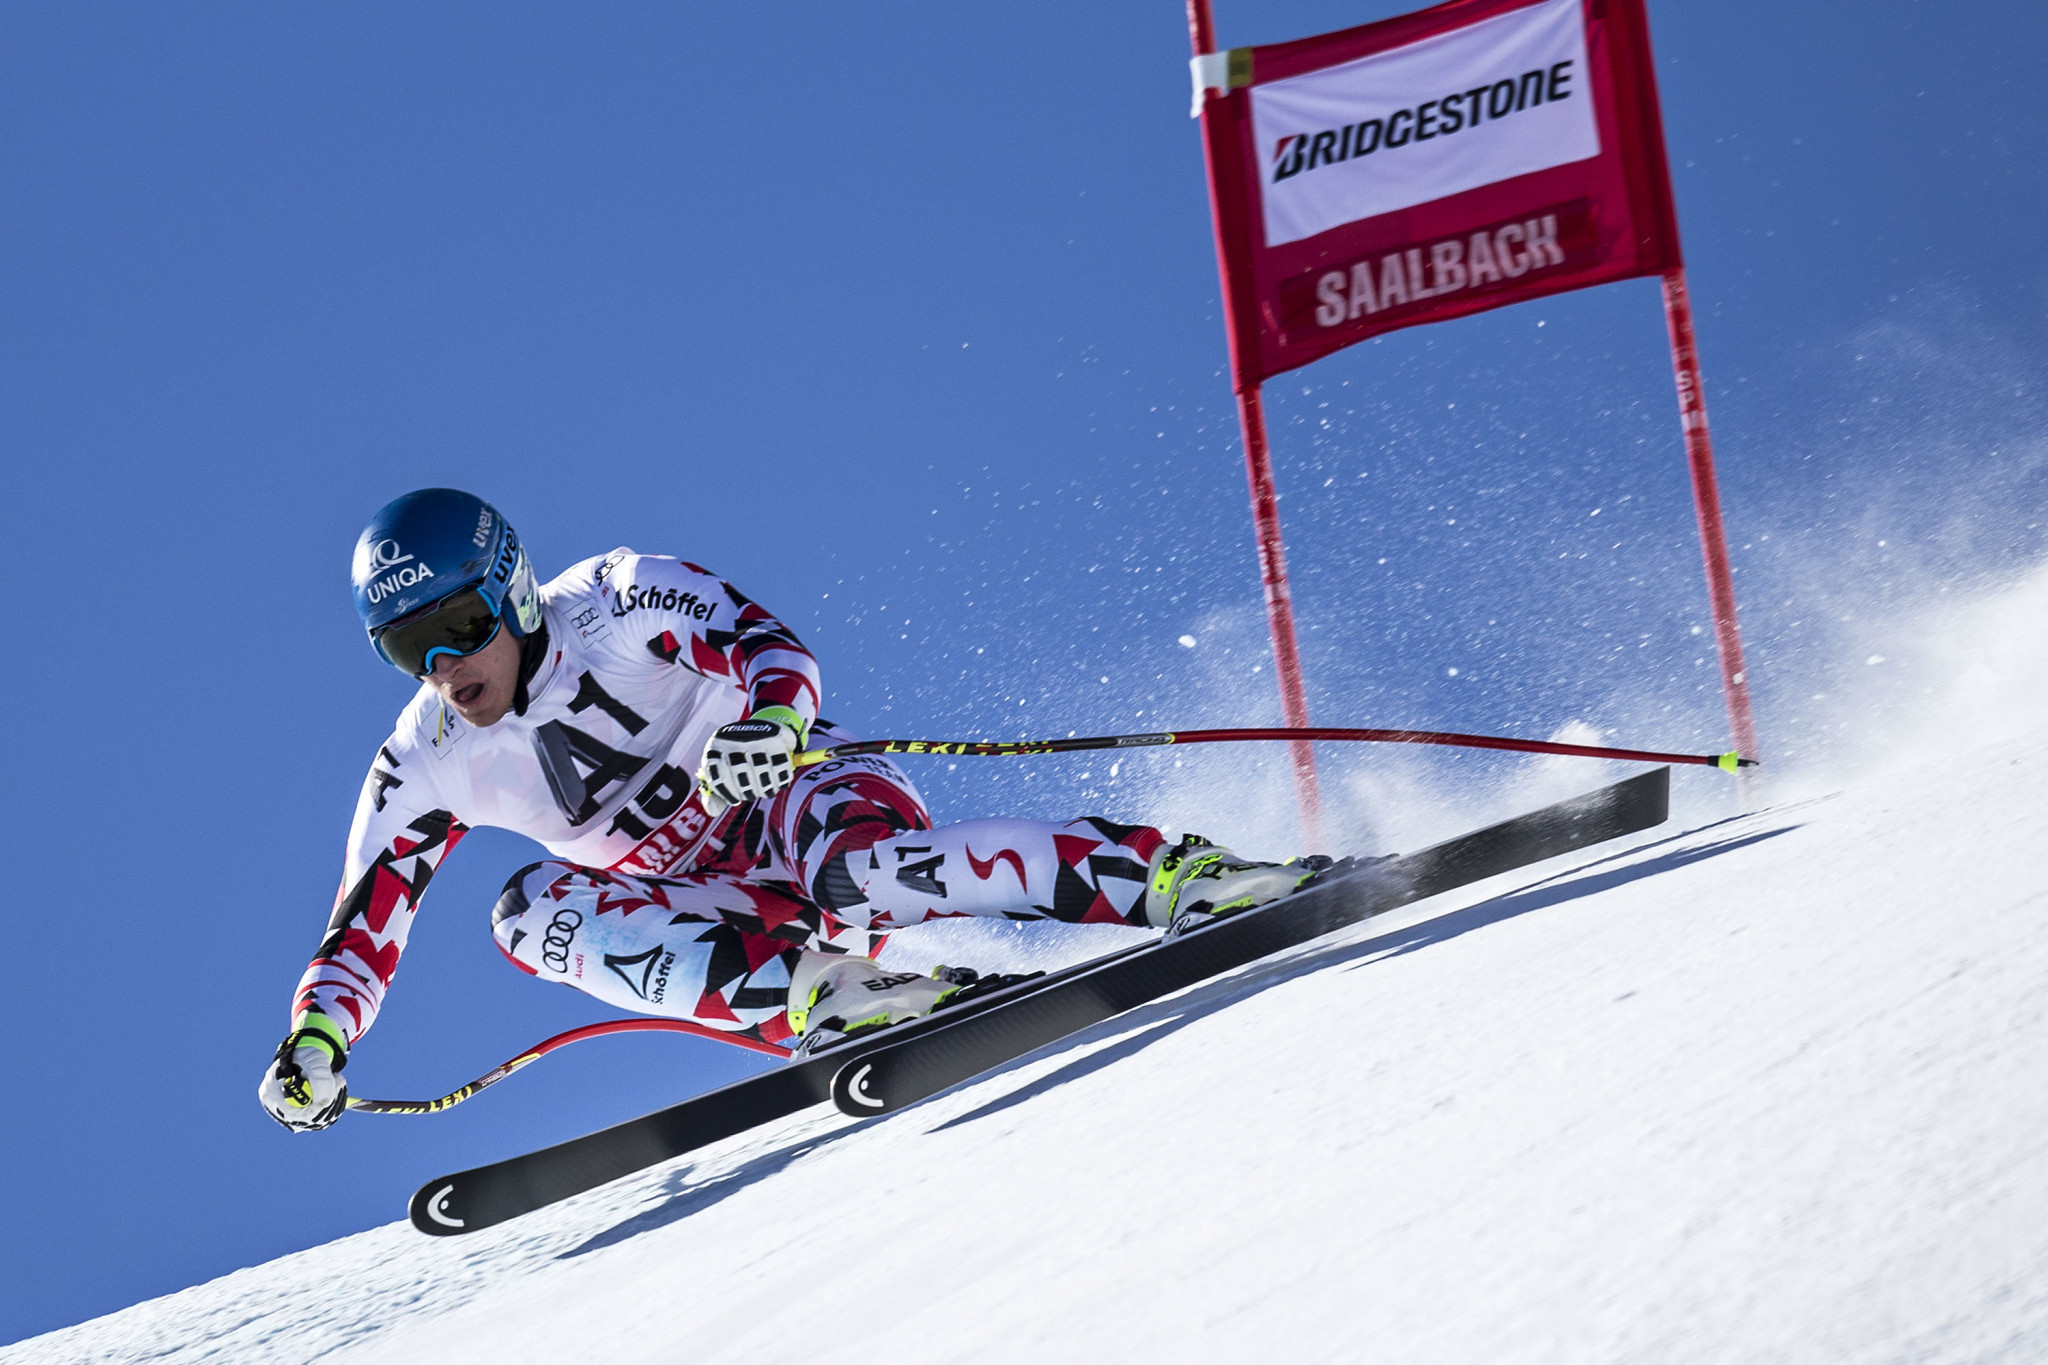 Saalbach to host 2025 Alpine World Ski Championships